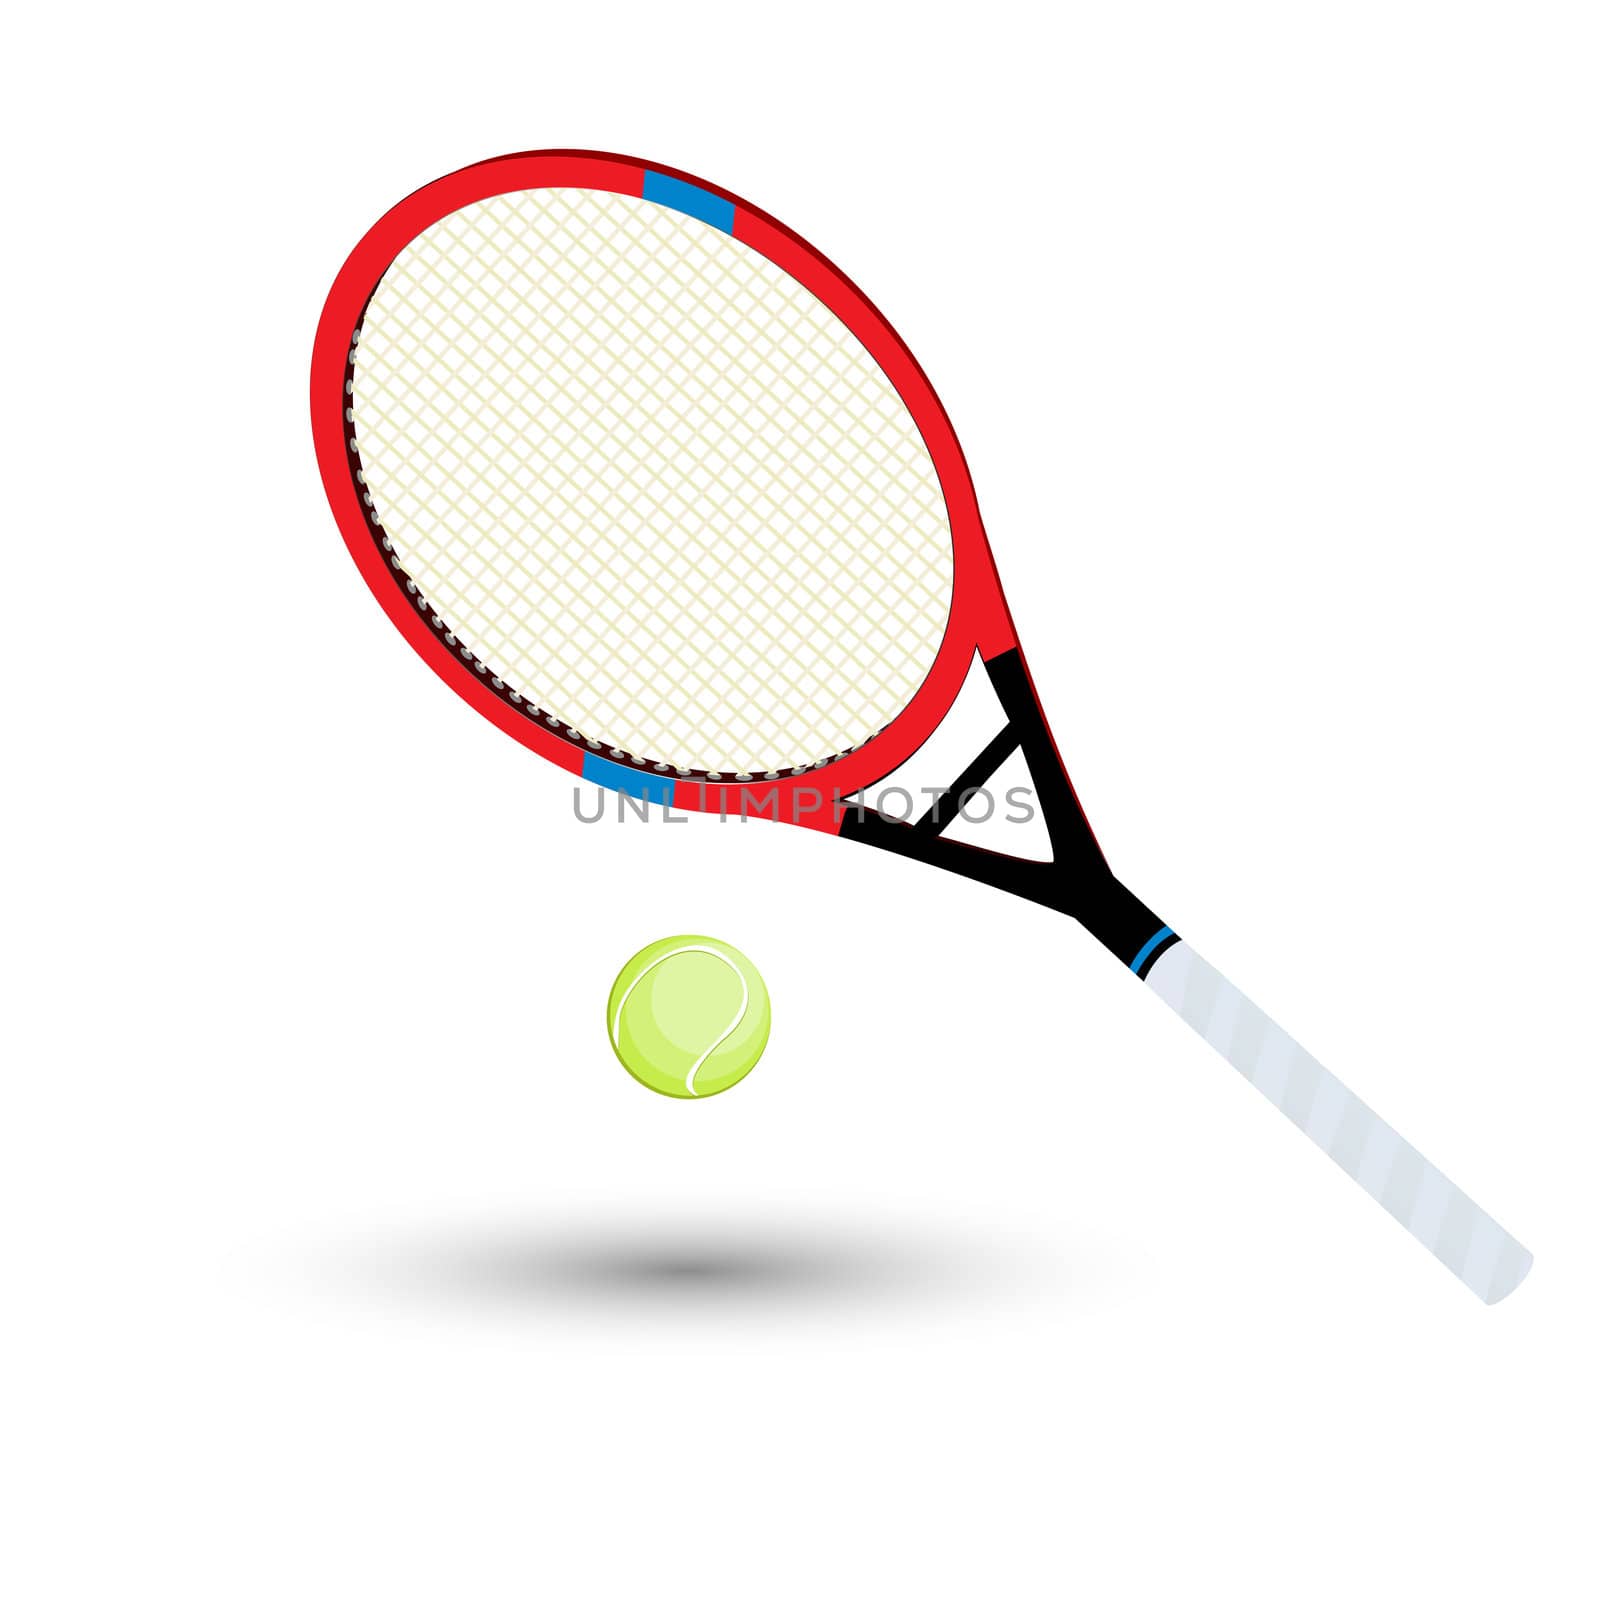 A tennis racket by Lirch